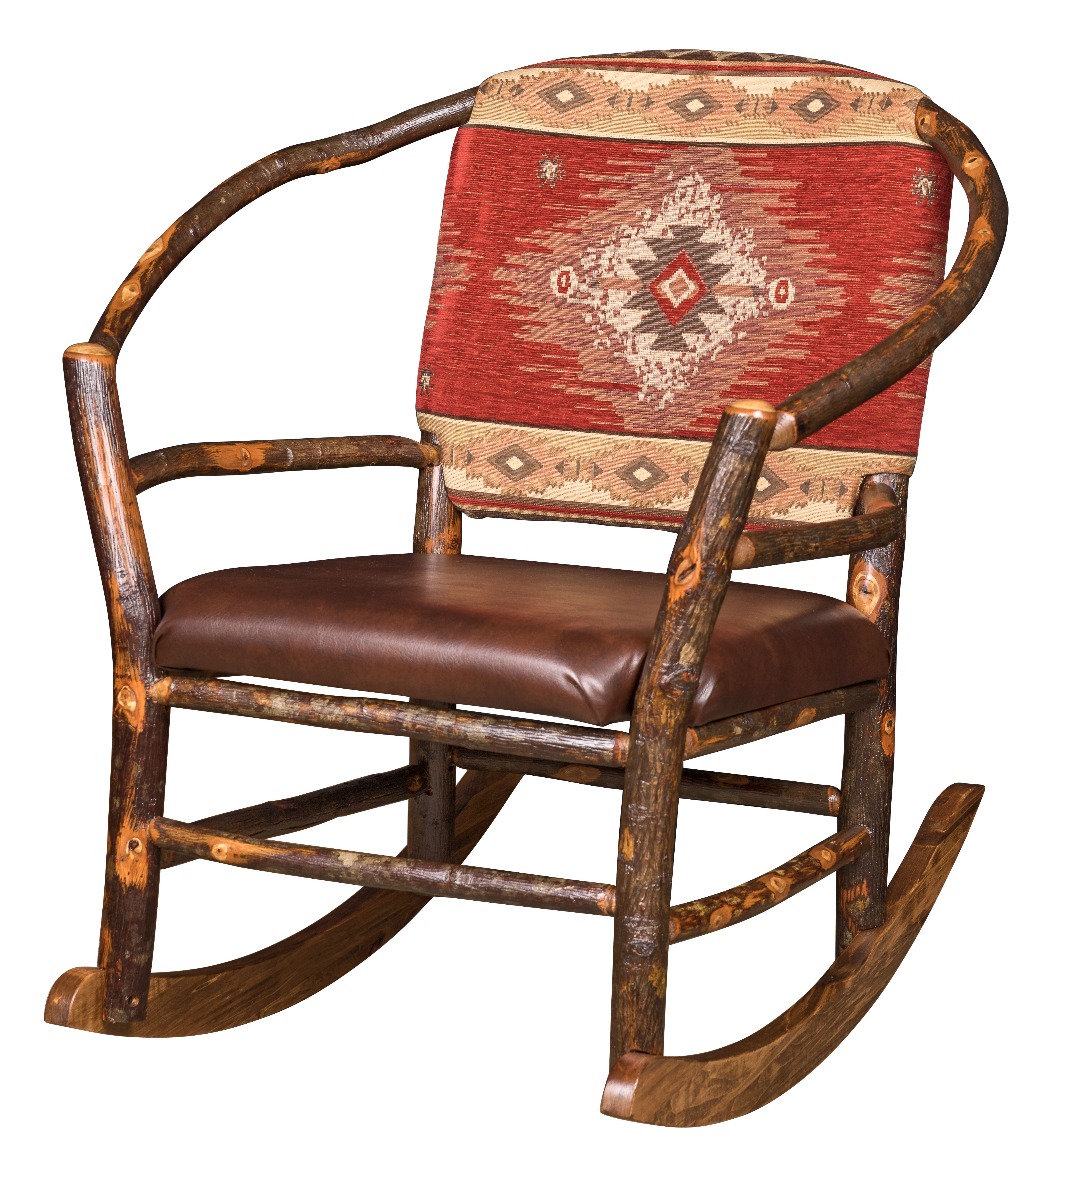 Earl Hoop Chair Rocker Natural Finish - Chelsea Home Furniture 420-1116